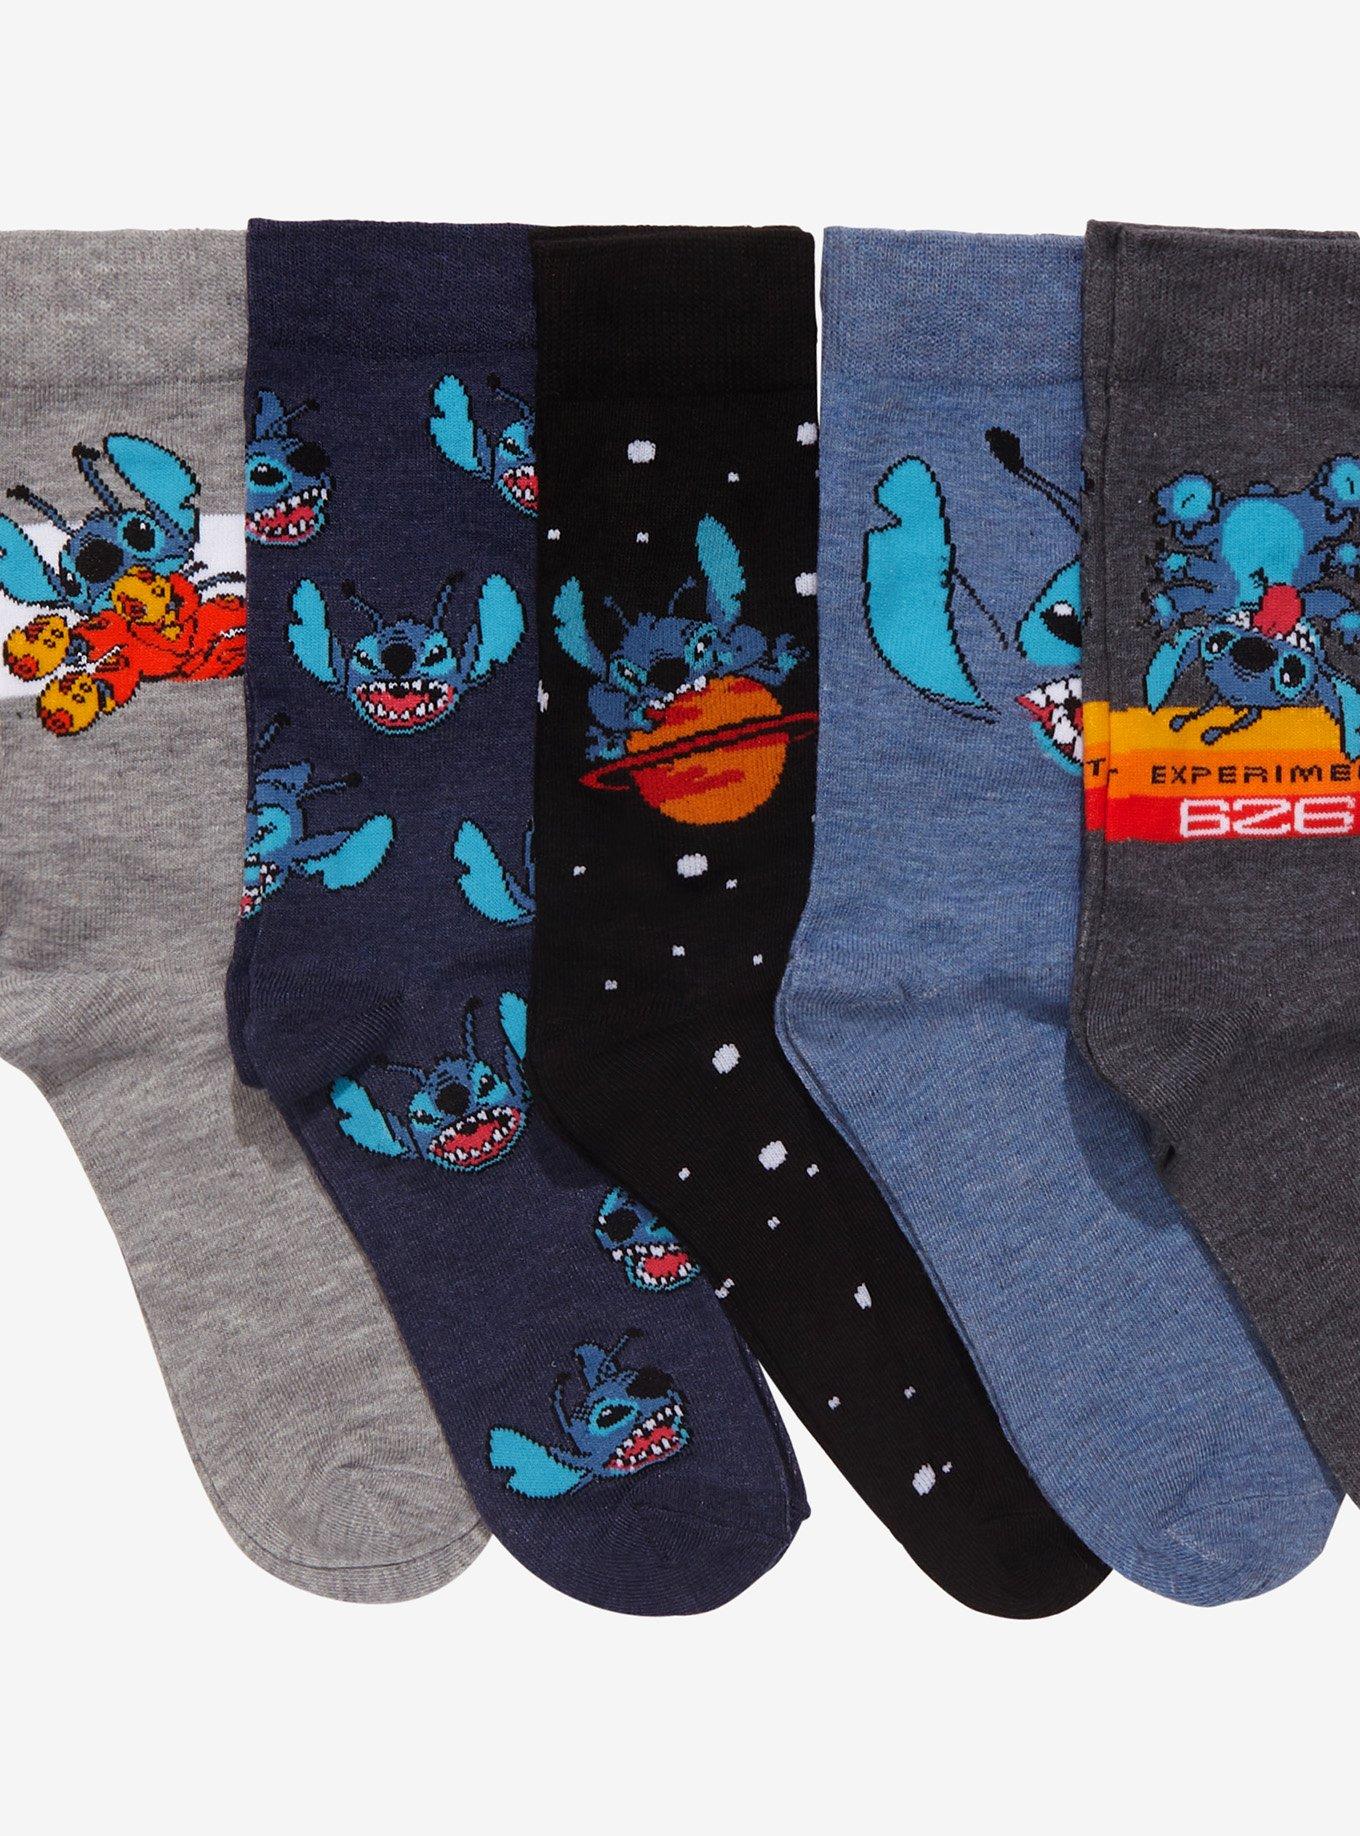 Disney Lilo & Stitch Experiment 626 Crew Socks 5 Pair, , alternate